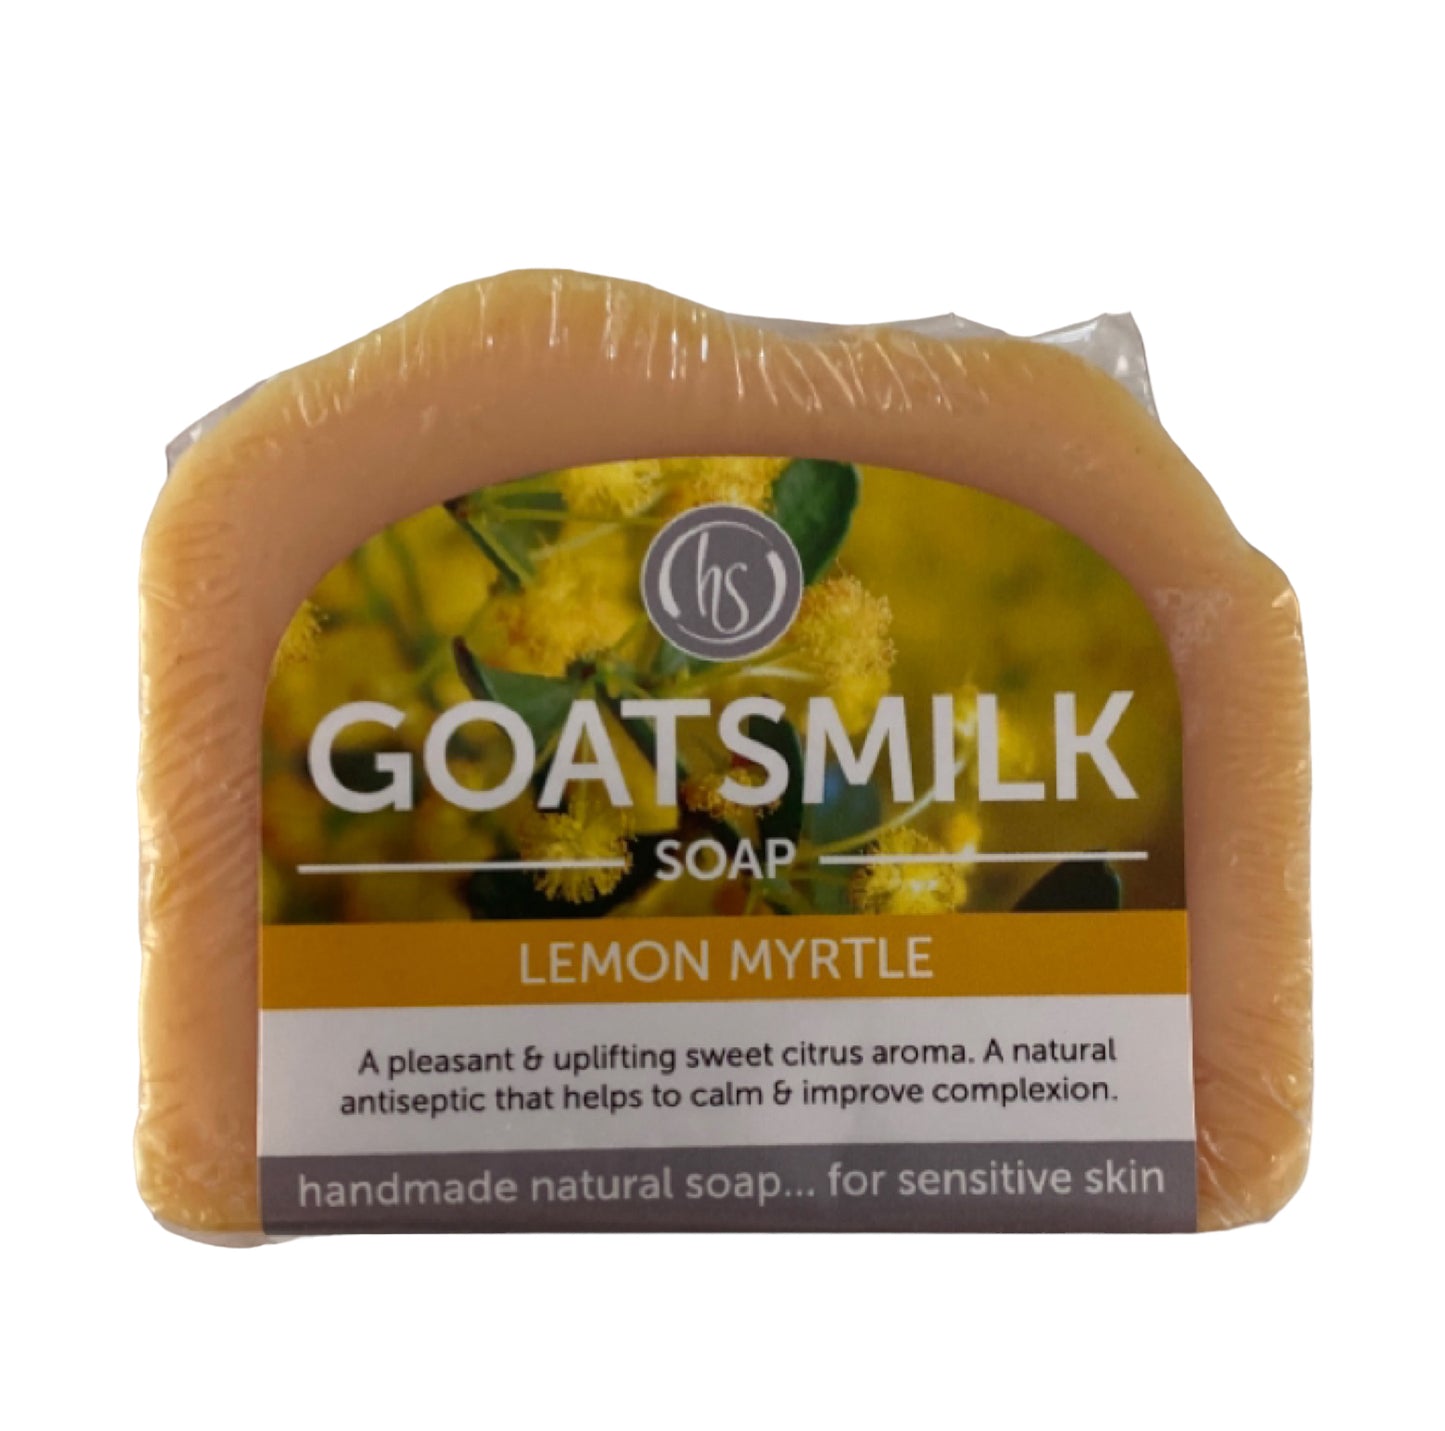 Garden Possible Gardener Stone Goatmilk Soap Gift - The Renmy Store Homewares & Gifts 